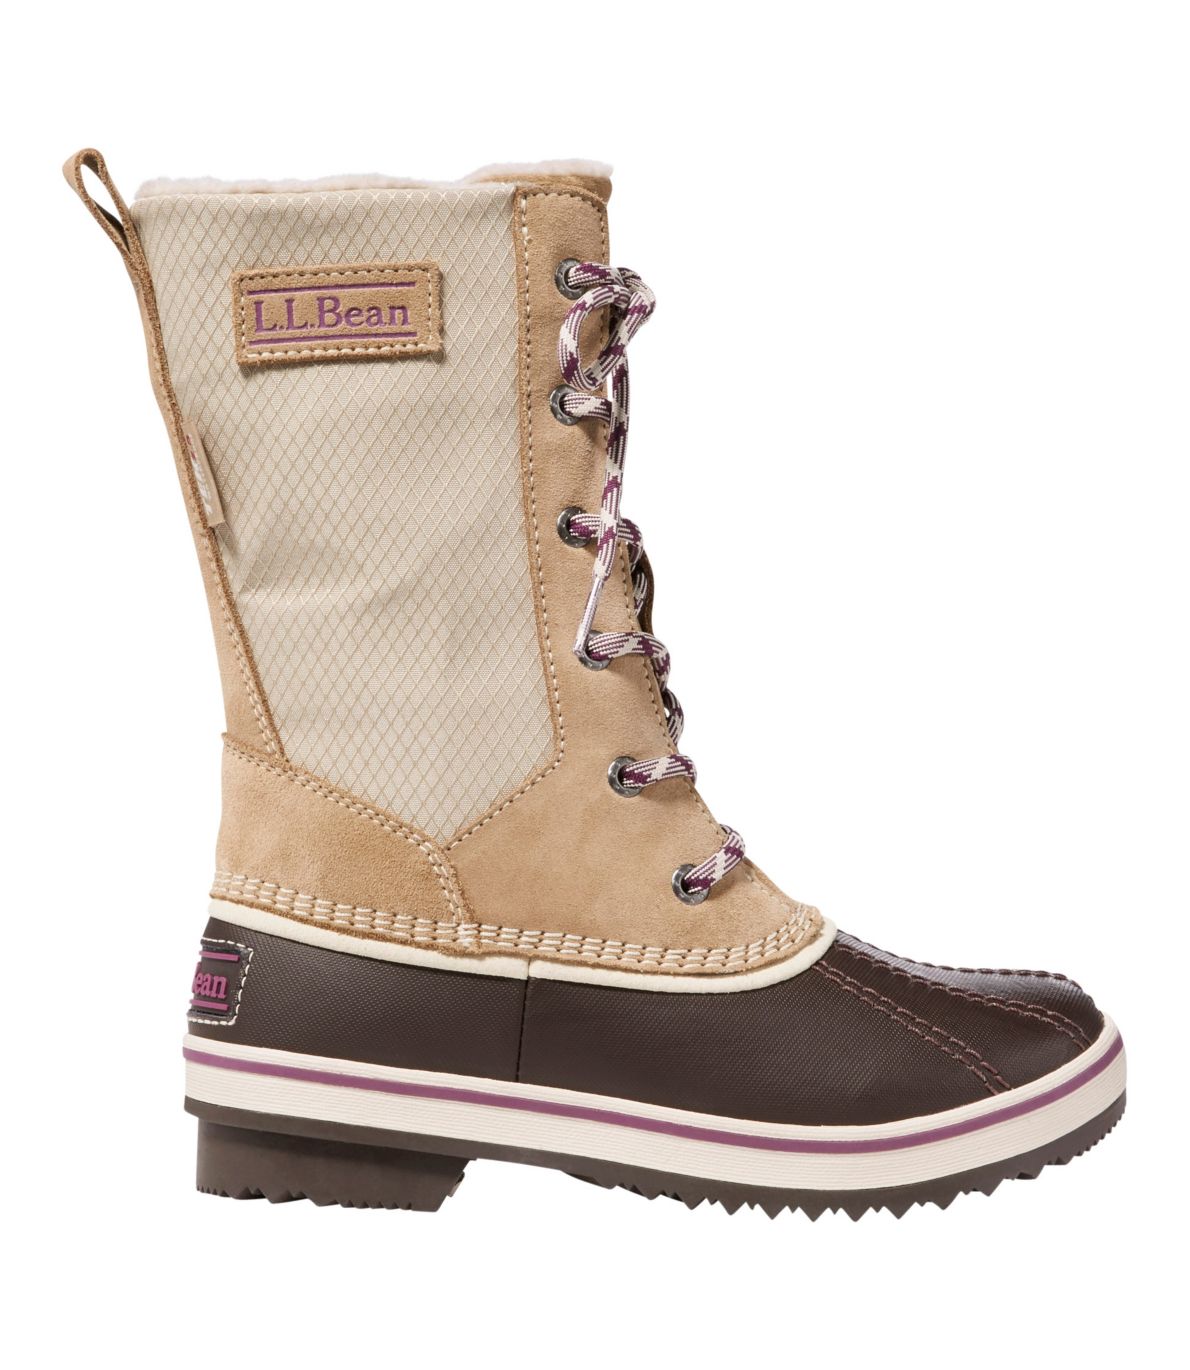 Kids’ L.L.Bean Rangeley Boots